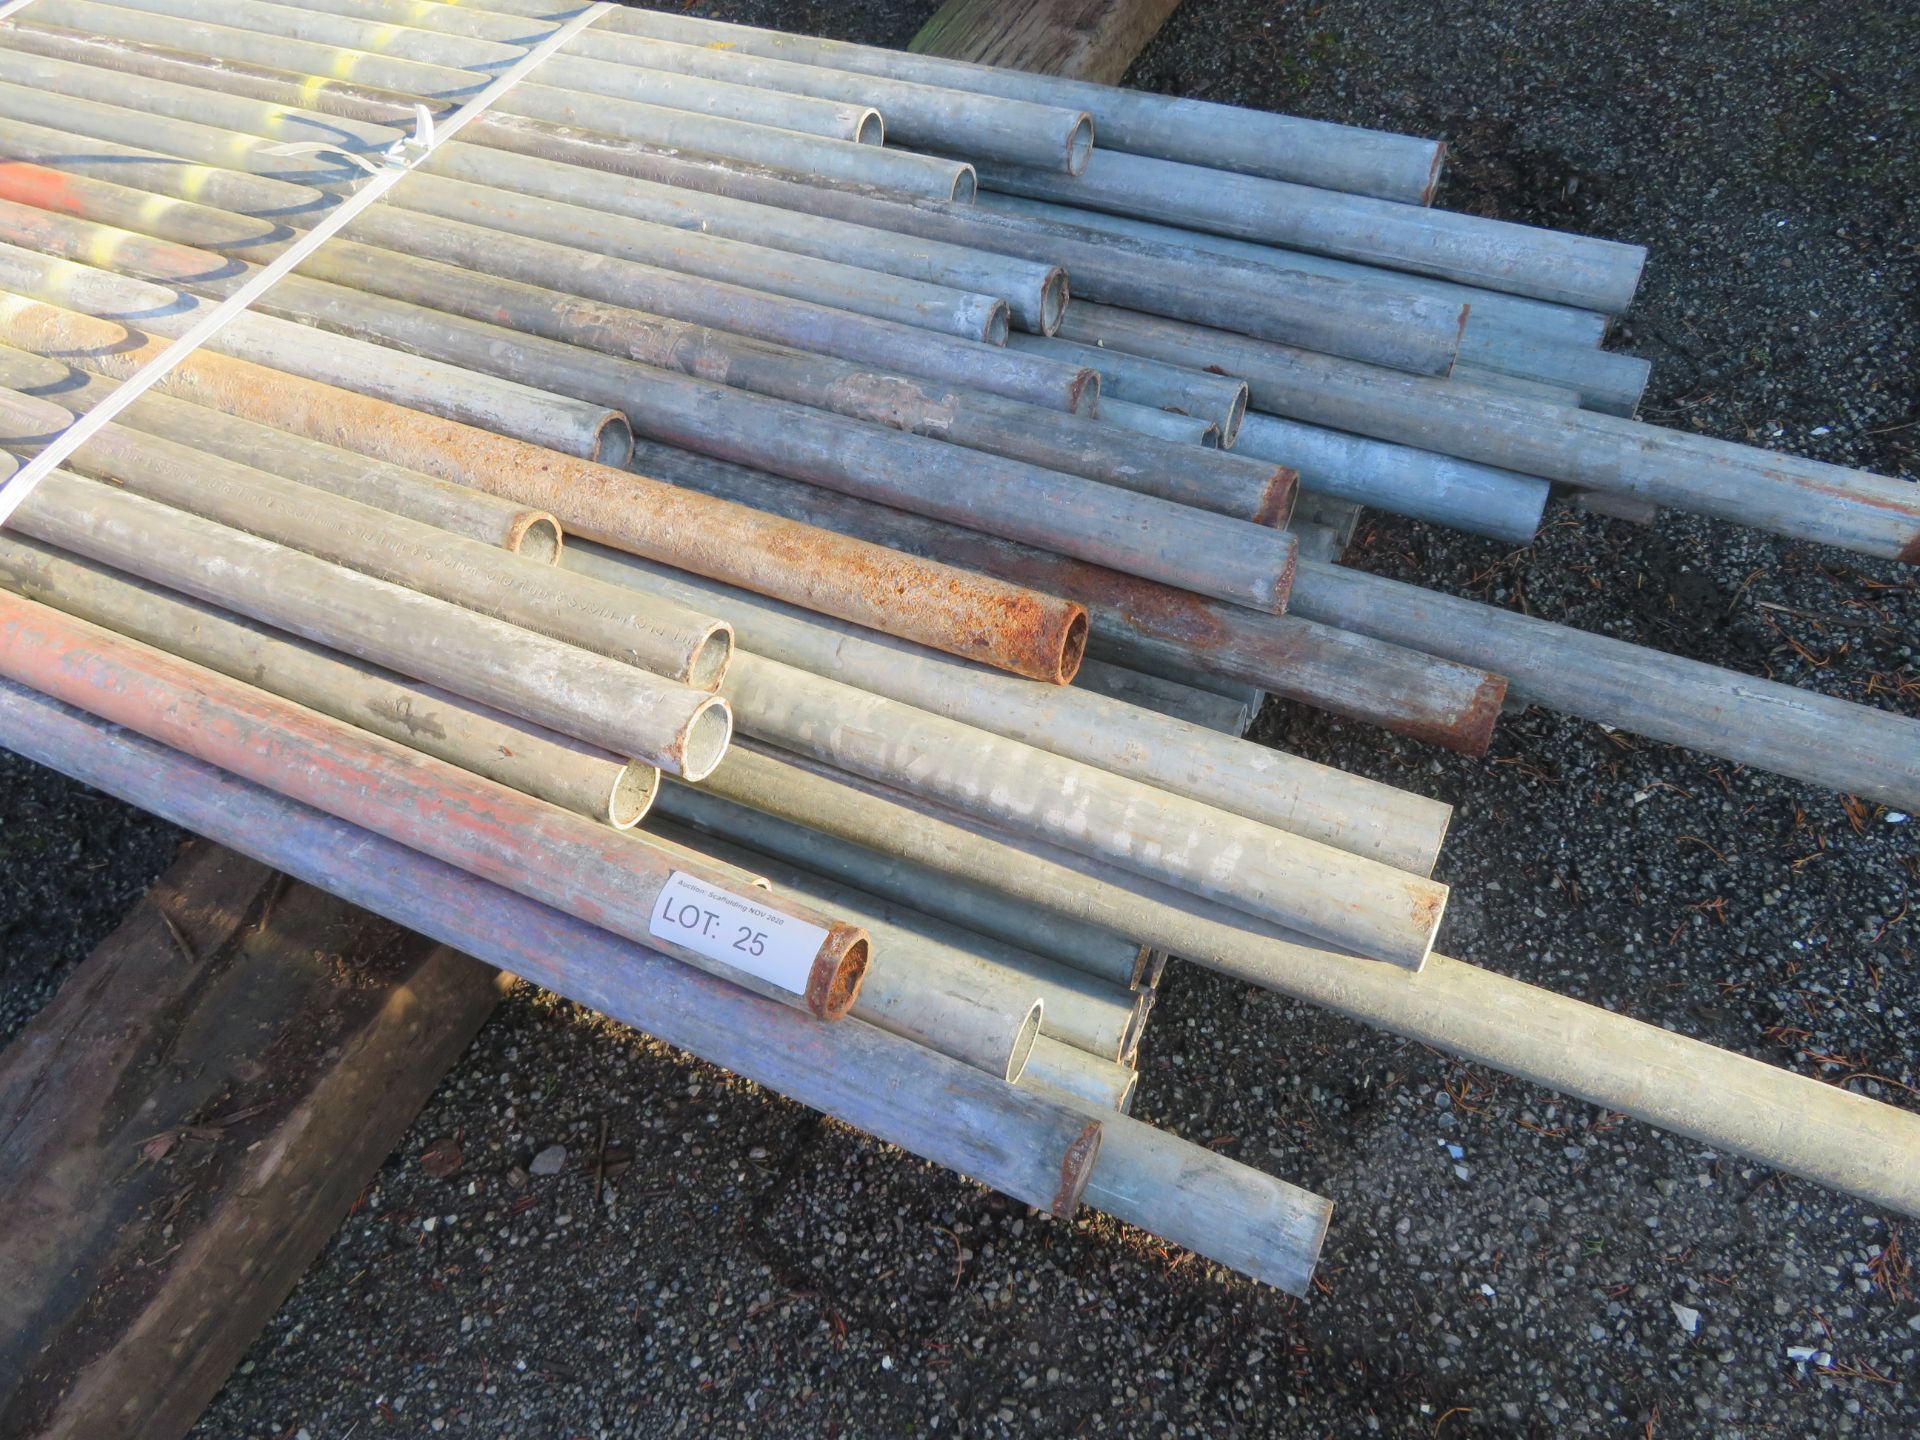 100x Various Length Galvanised Steel Scaffolding Poles. Lengths Range Between 16ft - 14ft. - Image 4 of 5